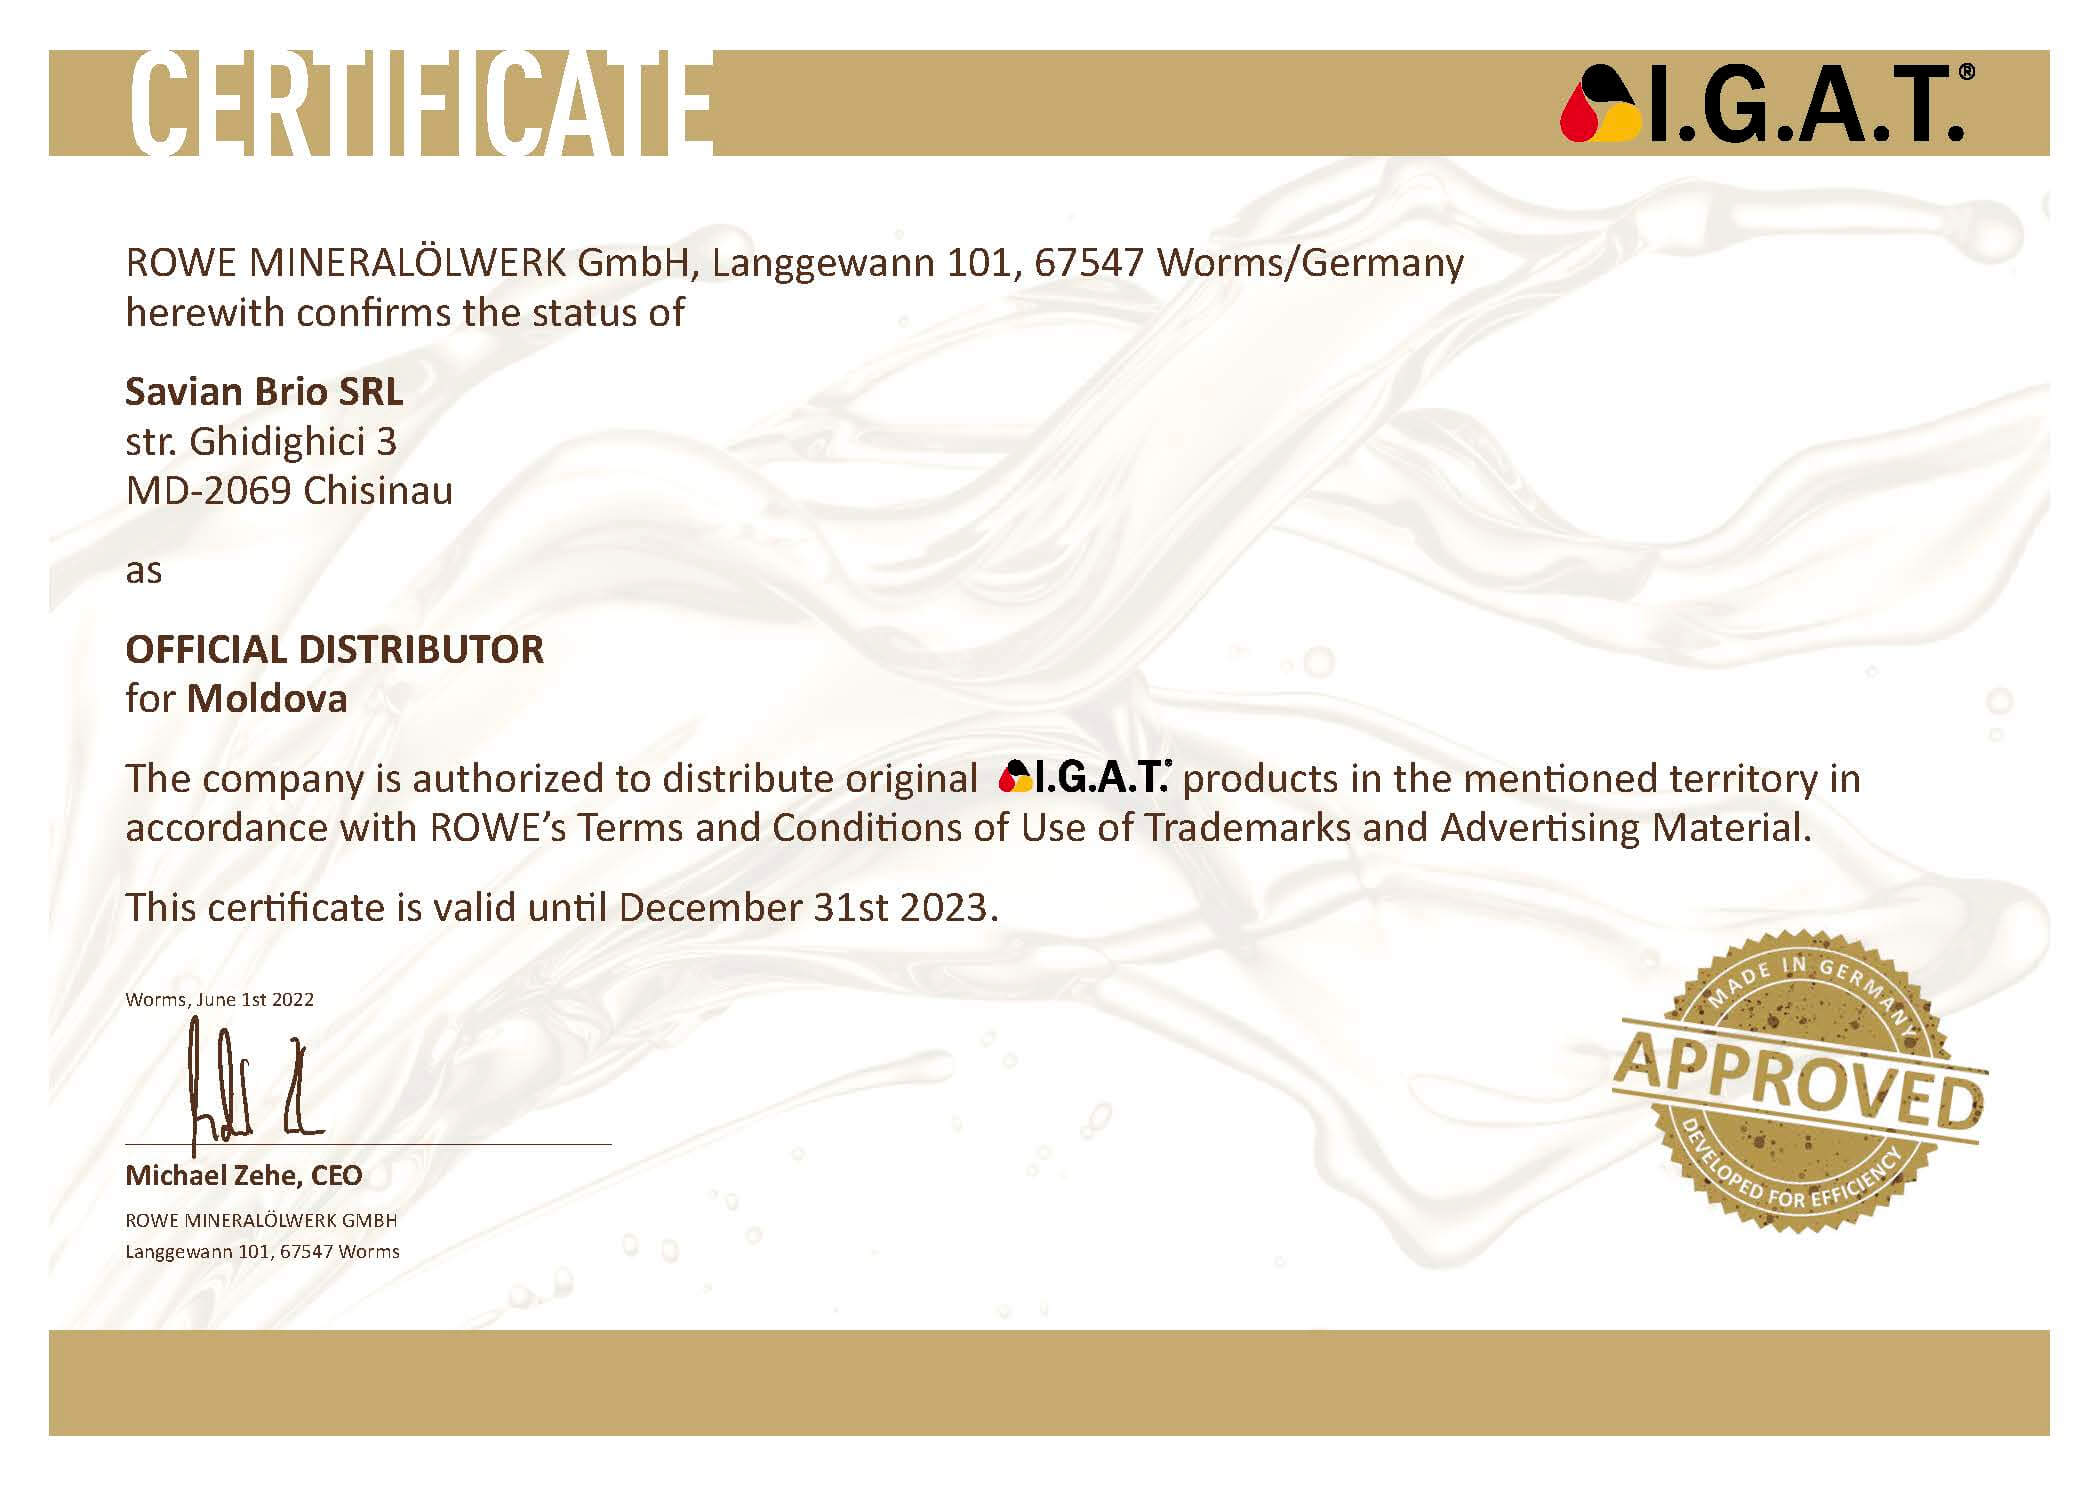 Certificate IGAT Official Distributor